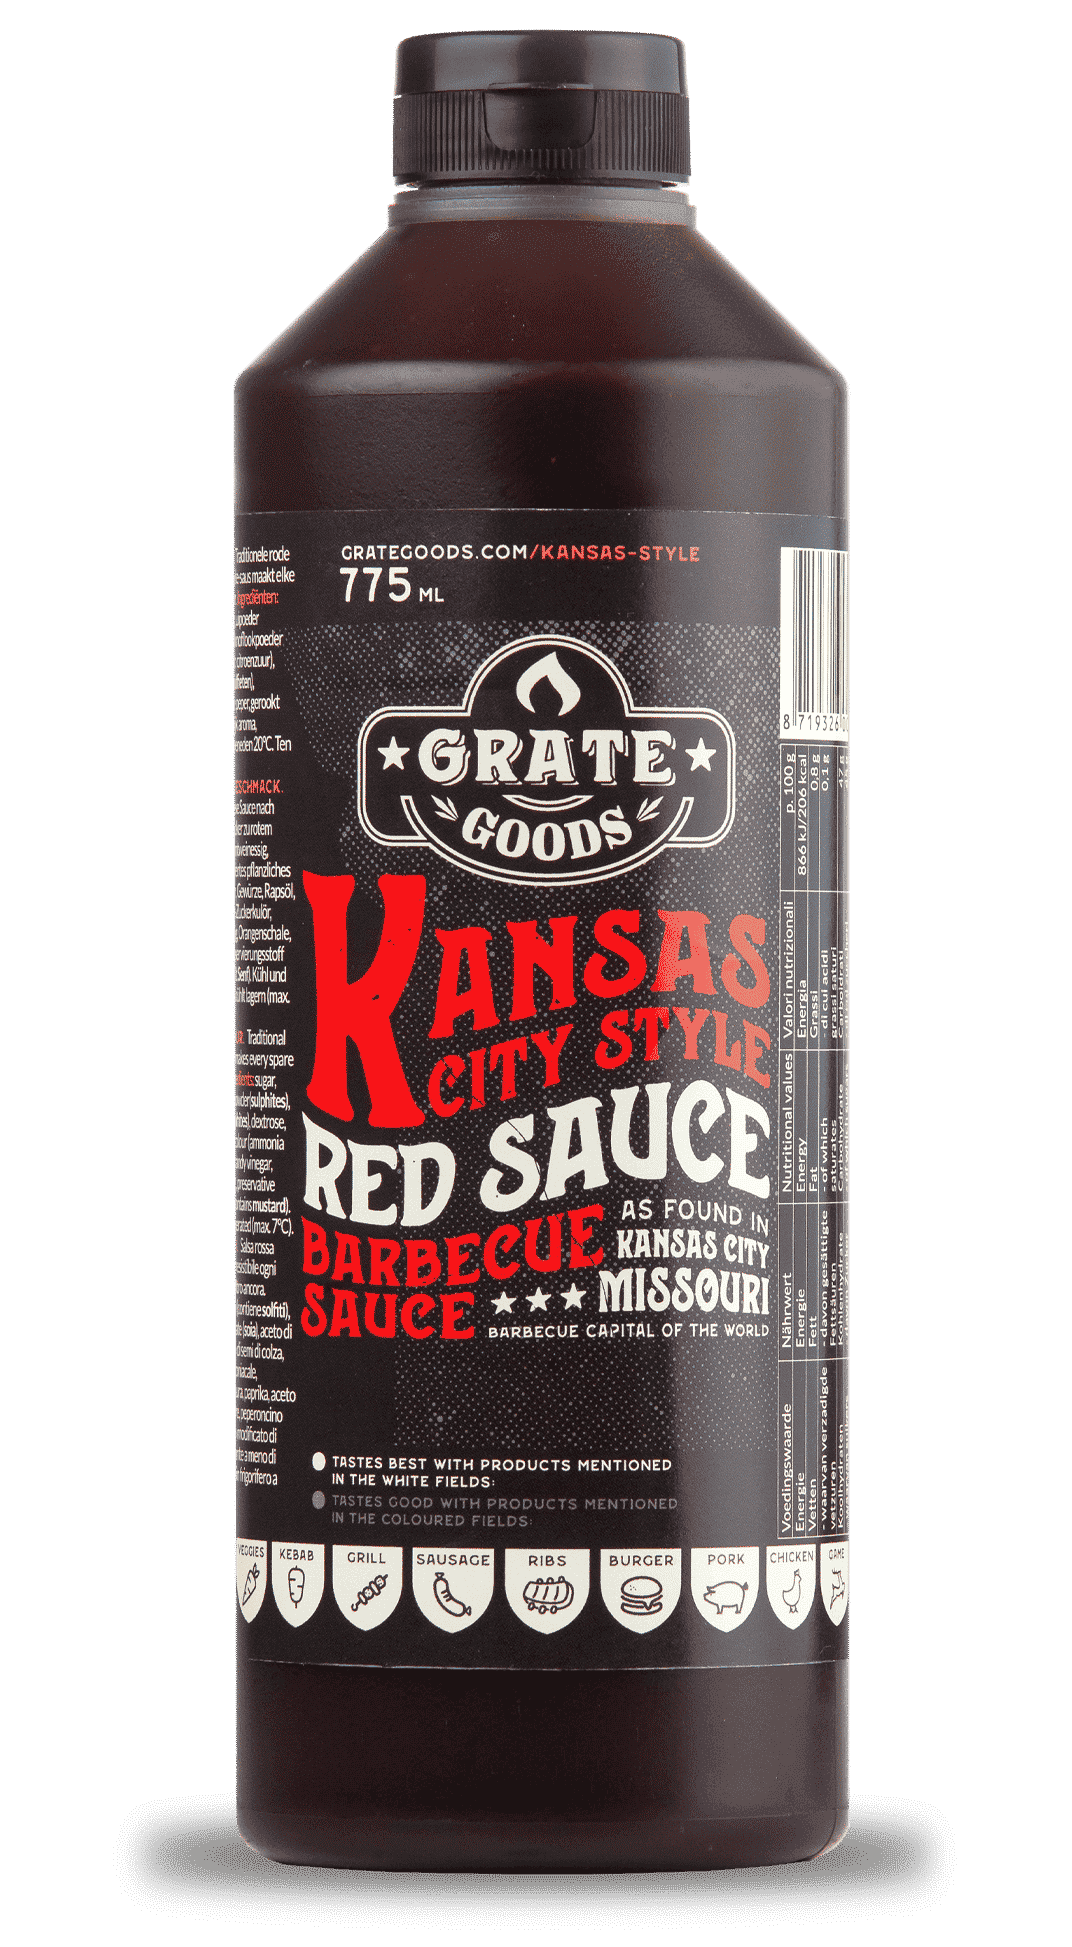 grate goods kansas city red sauce